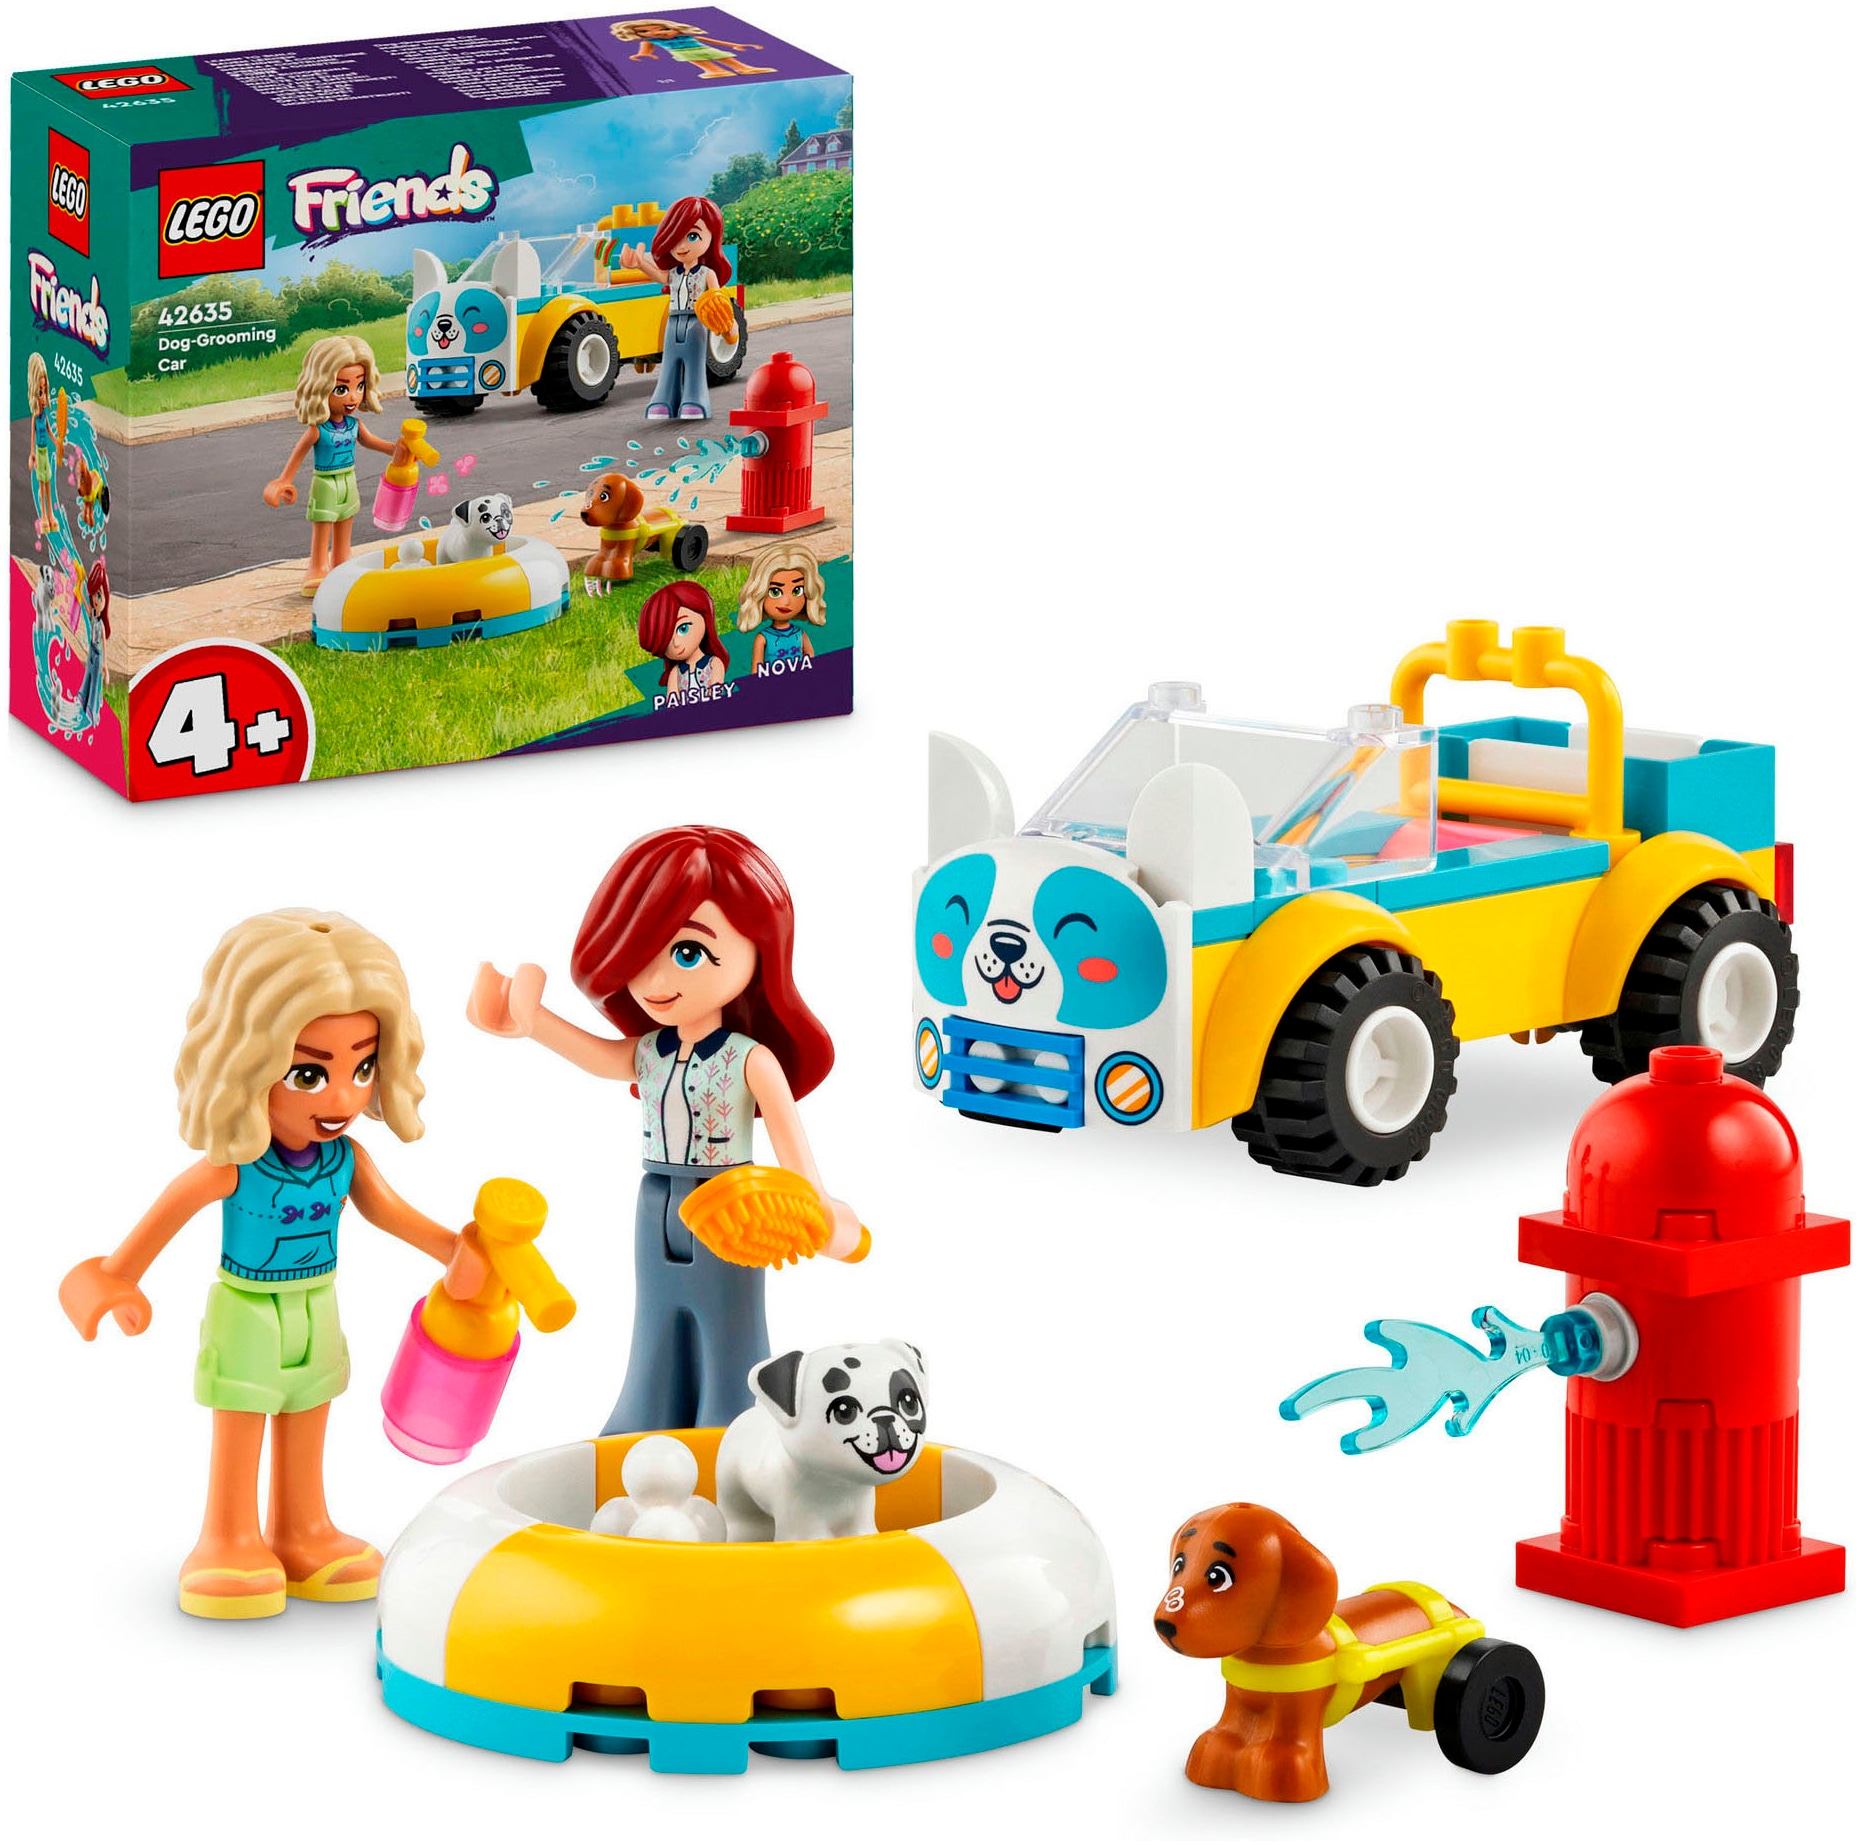 Konstruktionsspielsteine »Mobiler Hundesalon (42635), LEGO Friends«, (60 St.), Made in...